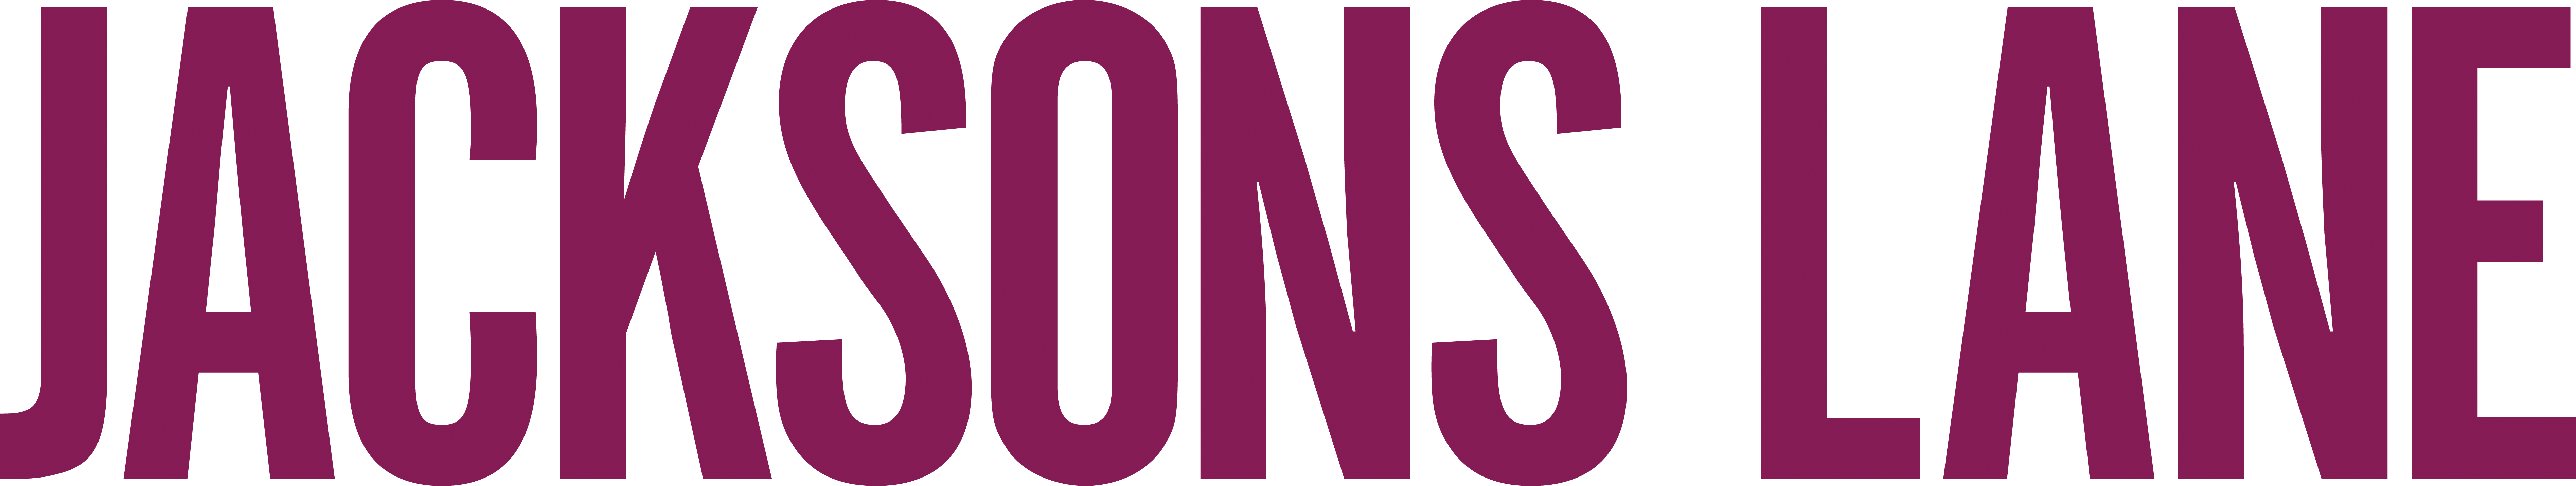 Jacksons Lane - North London's Creative Space - Logo